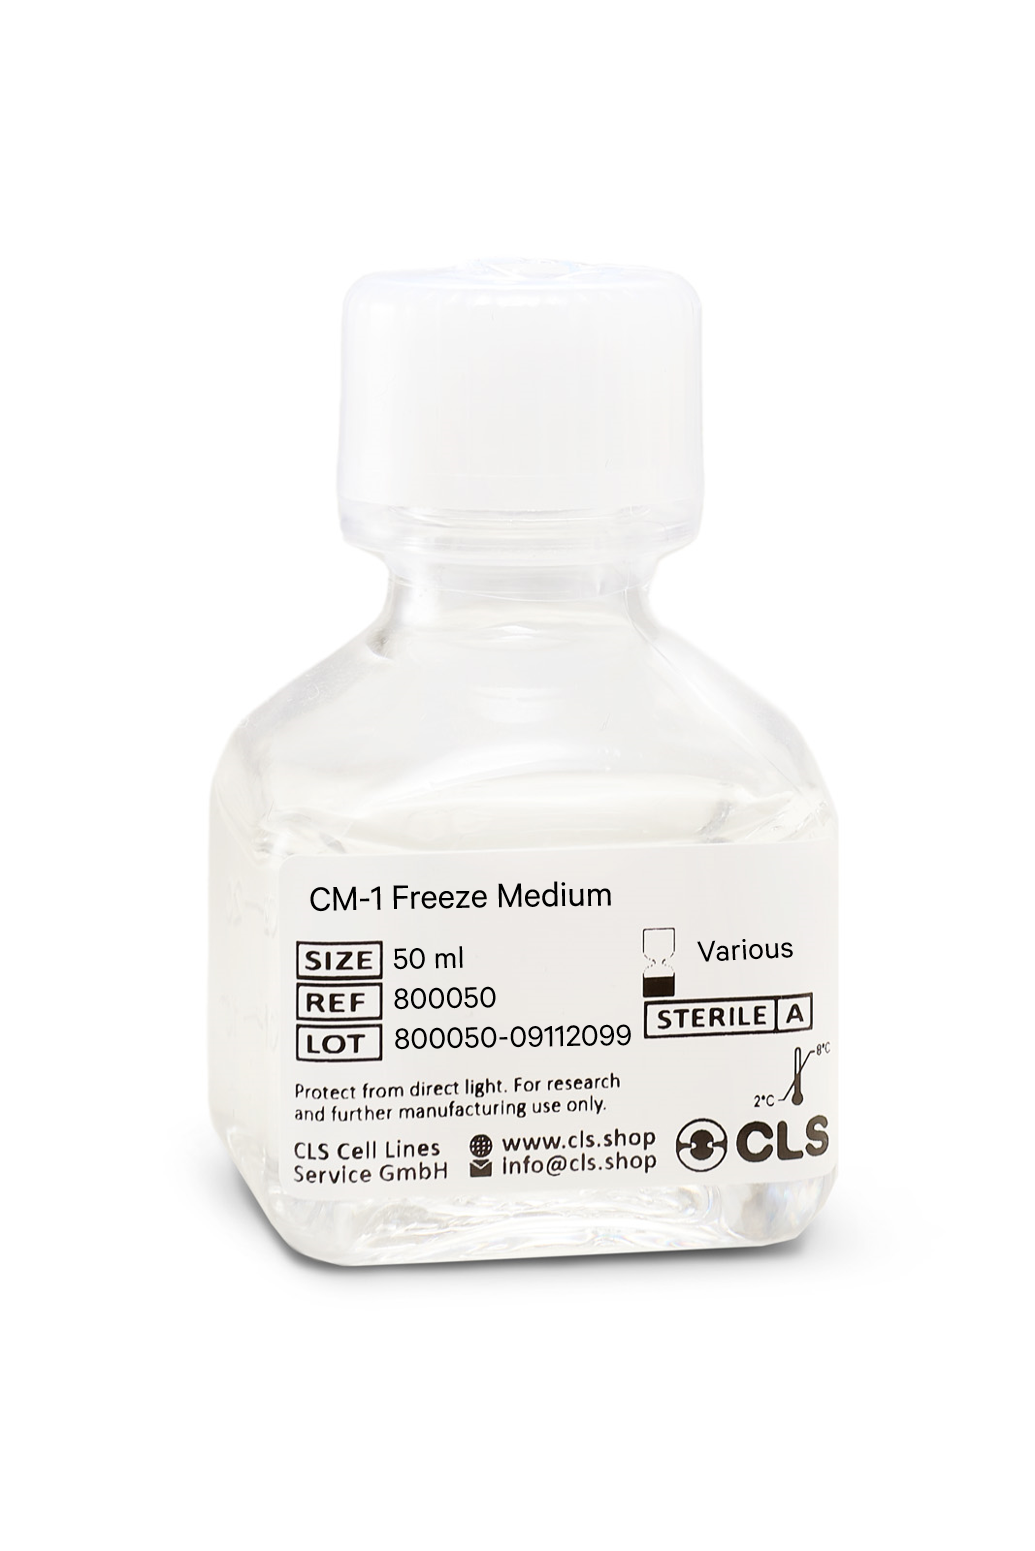  Freeze Medium CM-1 - 50 ml